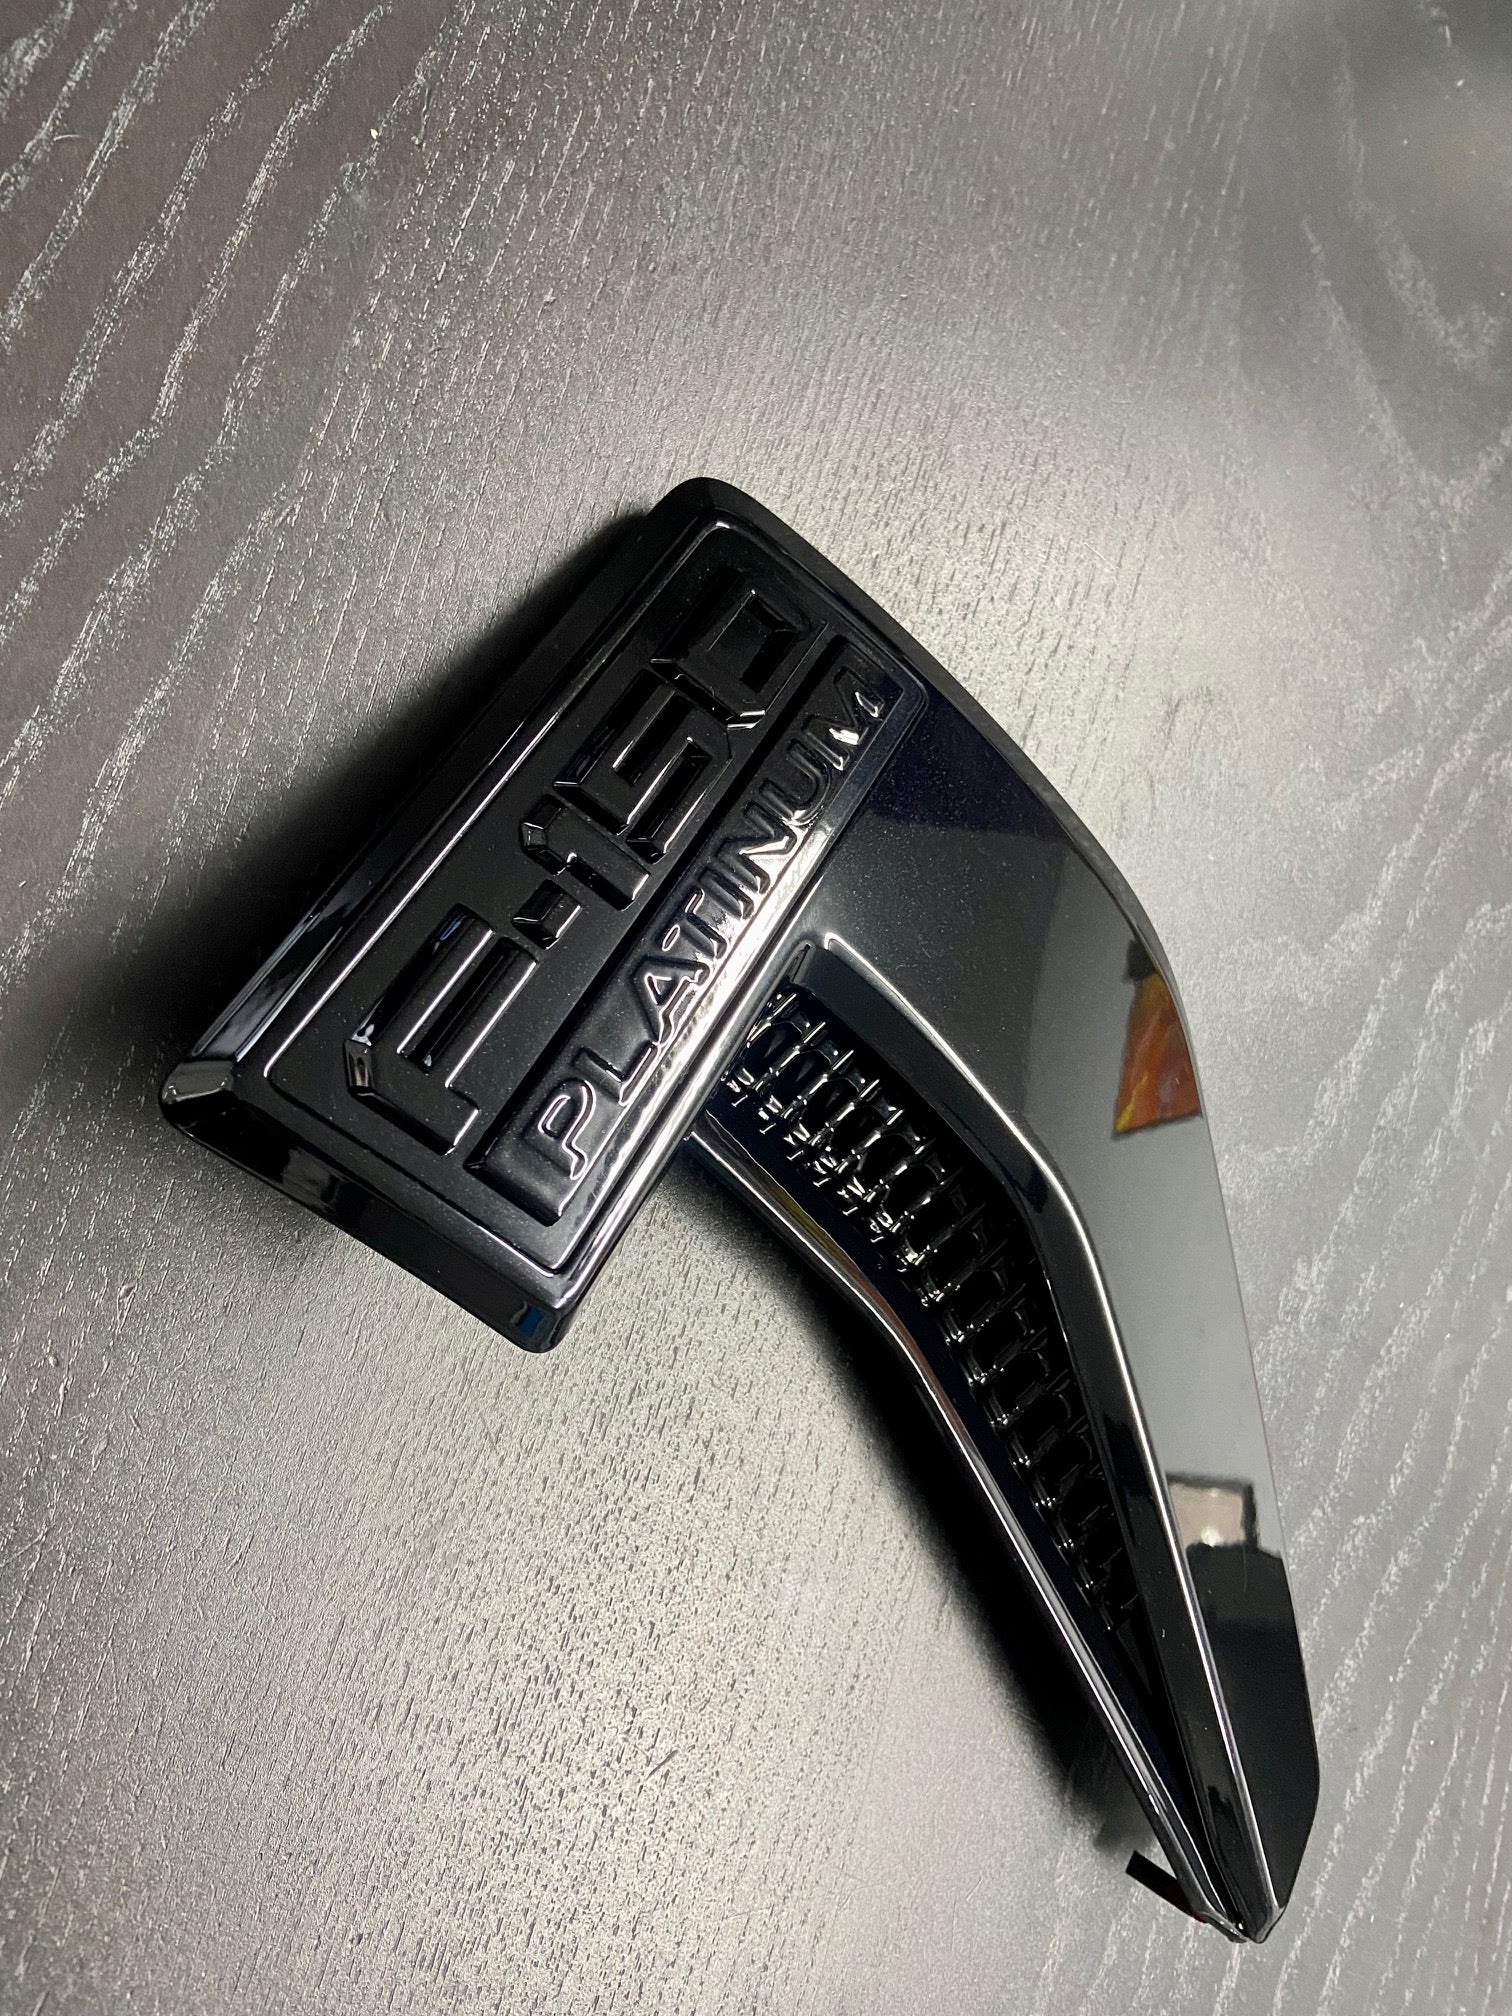 2021+ OEM Ford F-150 Fender Emblem Badges Custom Painted